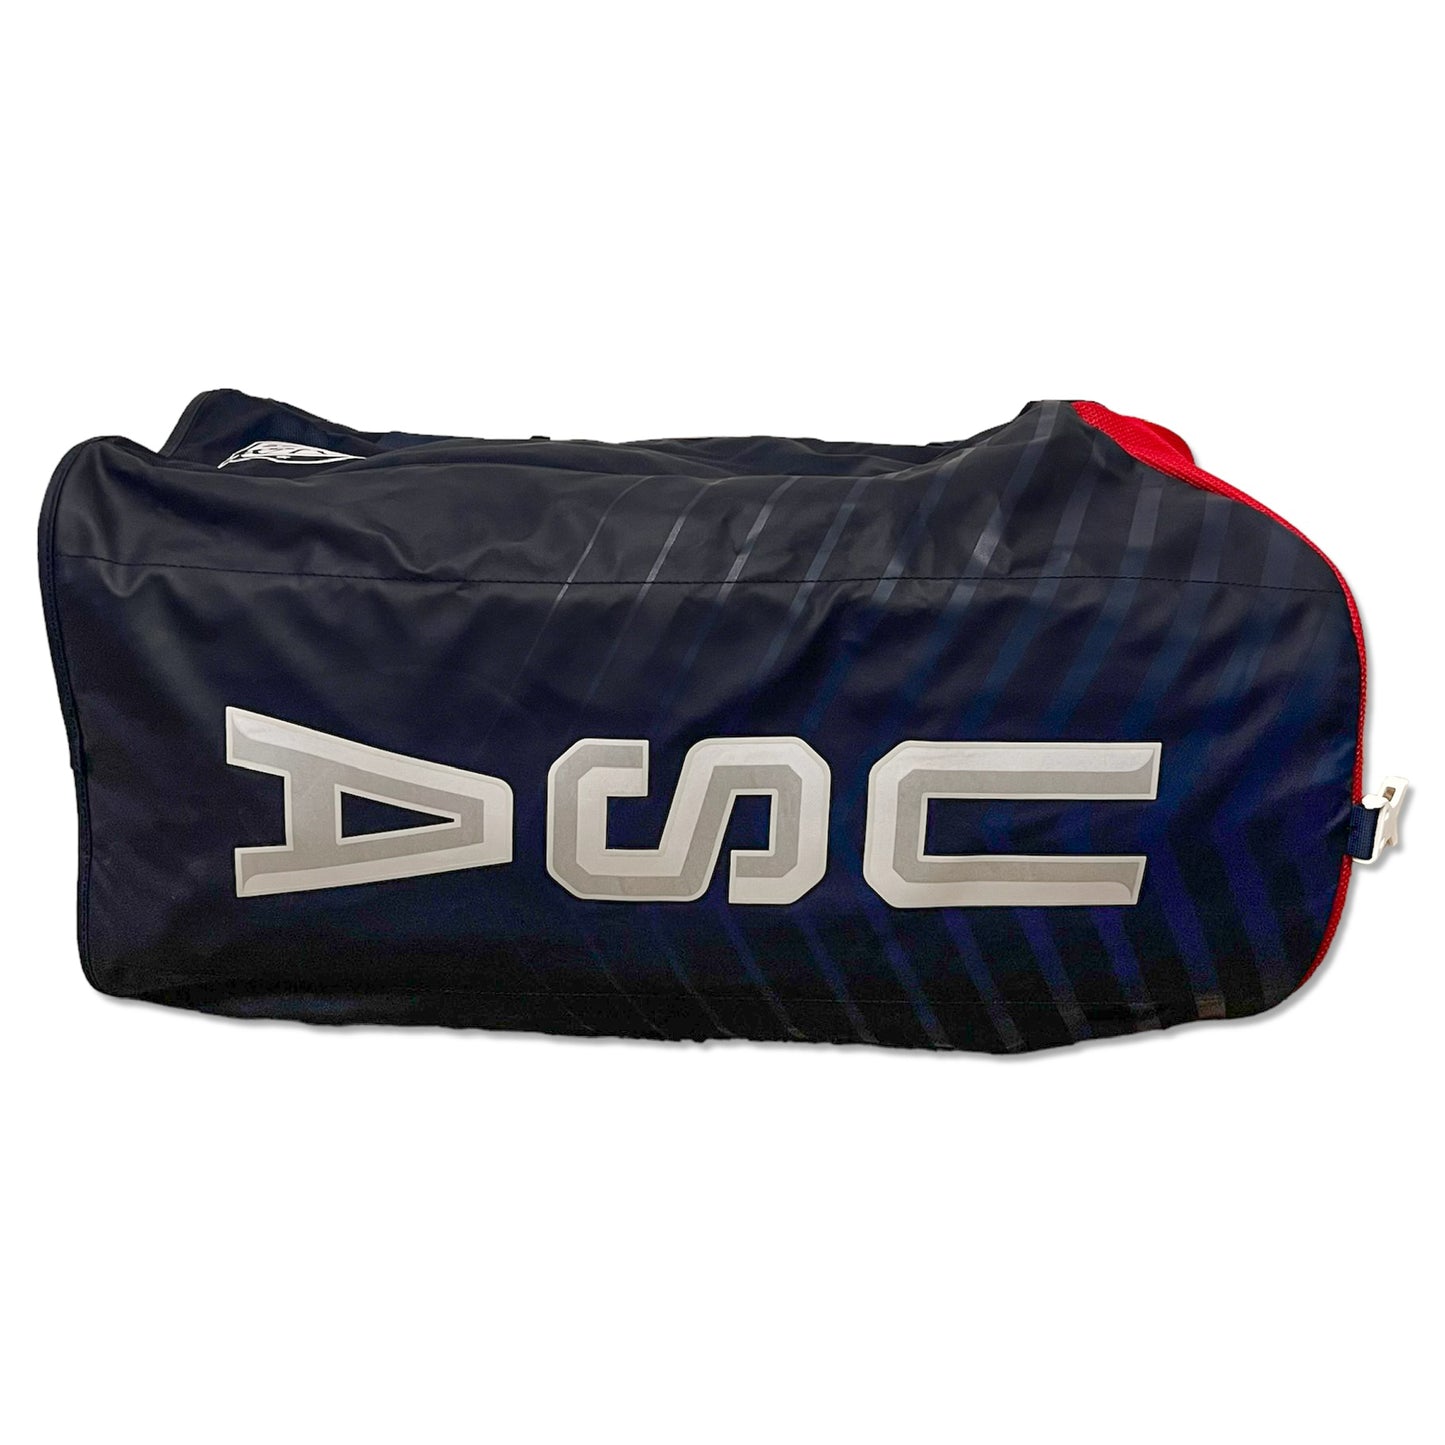 Authentic Team USA Basketball 2016 Olympics Nike Duffle Bag